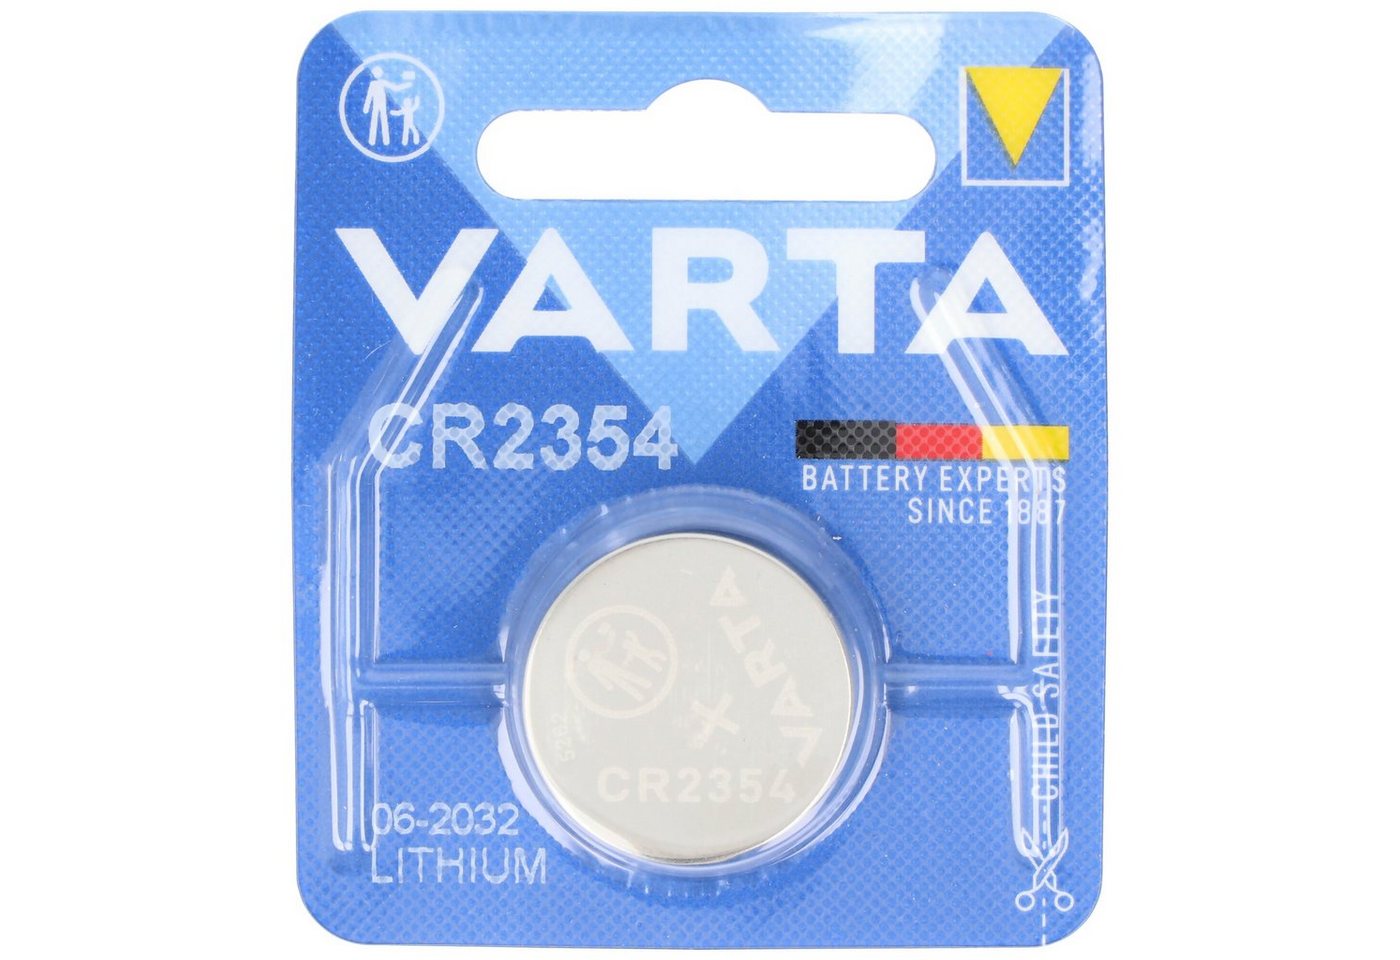 VARTA Varta Batterie Lithium, Knopfzelle, CR2354, 3V Electronics, Retail Bl Knopfzelle von VARTA